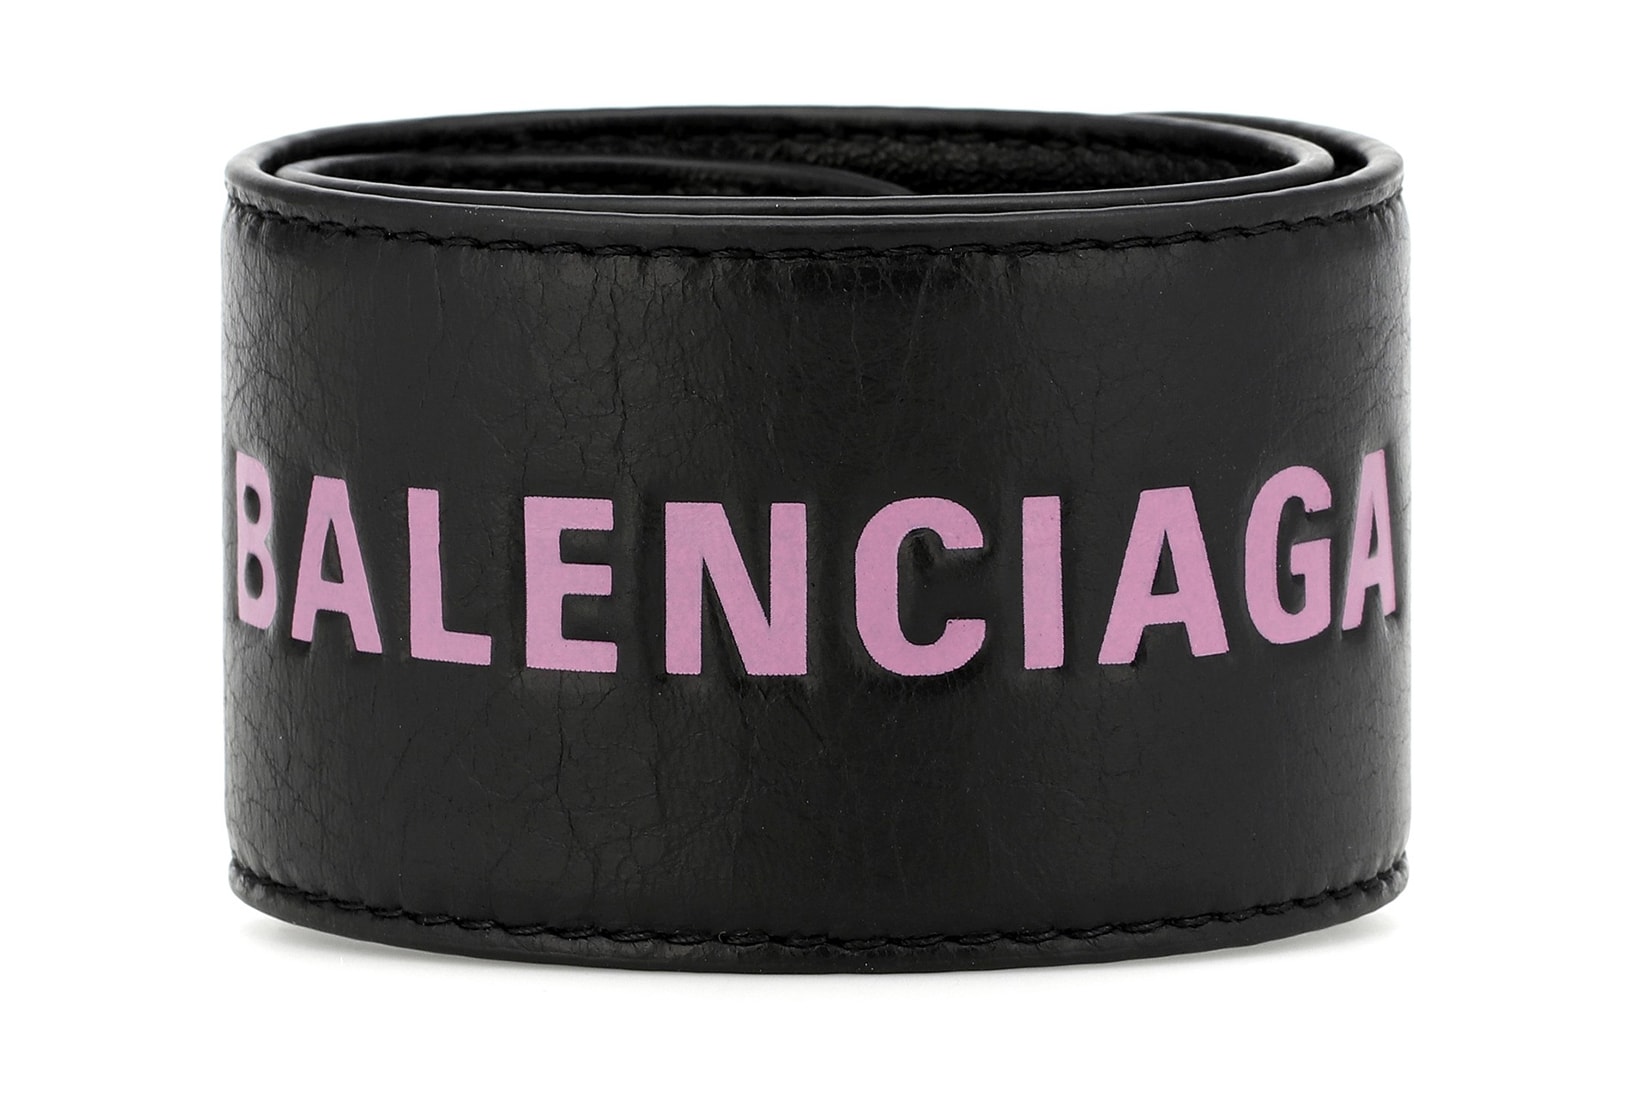 Balenciaga Leather Logo Slap Bracelet Black Hot Pink